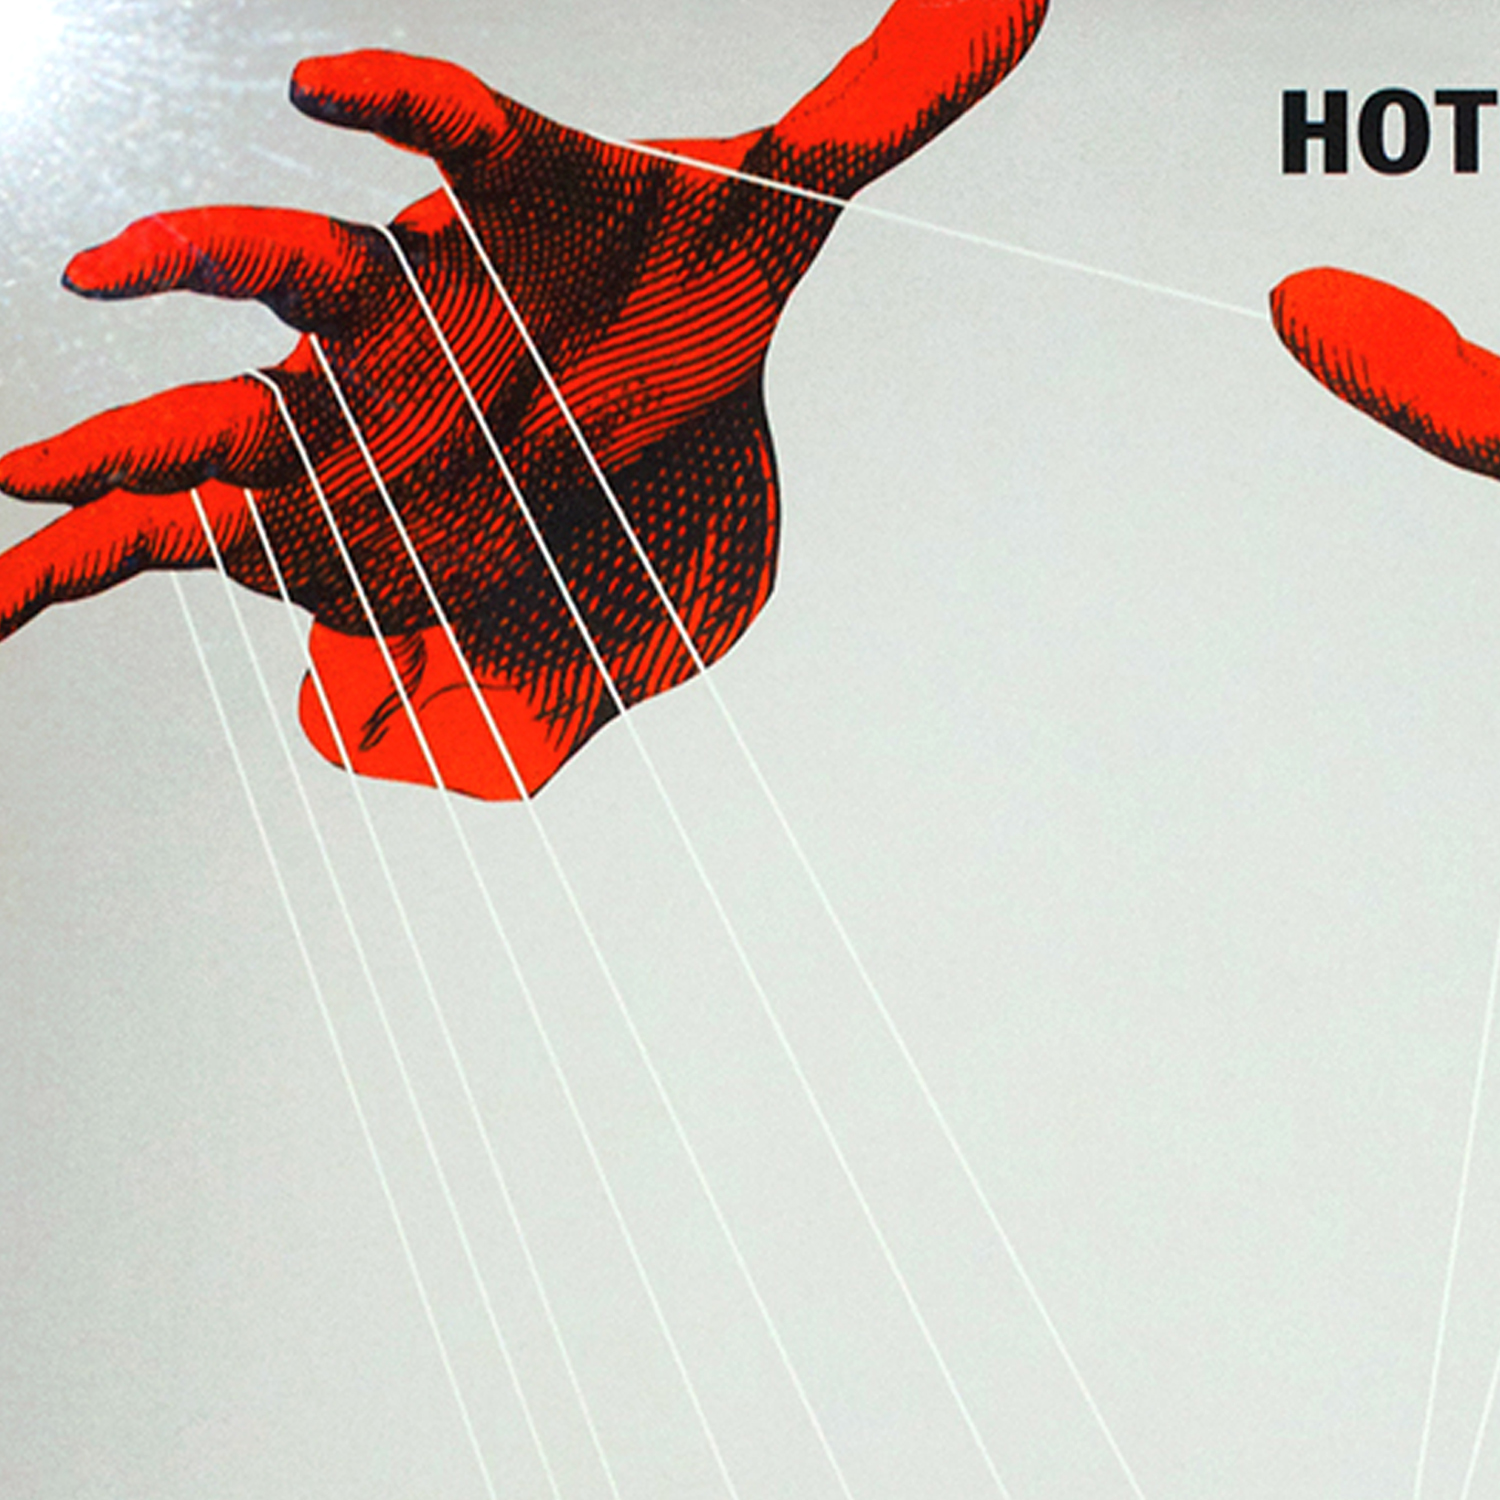 Hot Hot Heat - Sleeve Design